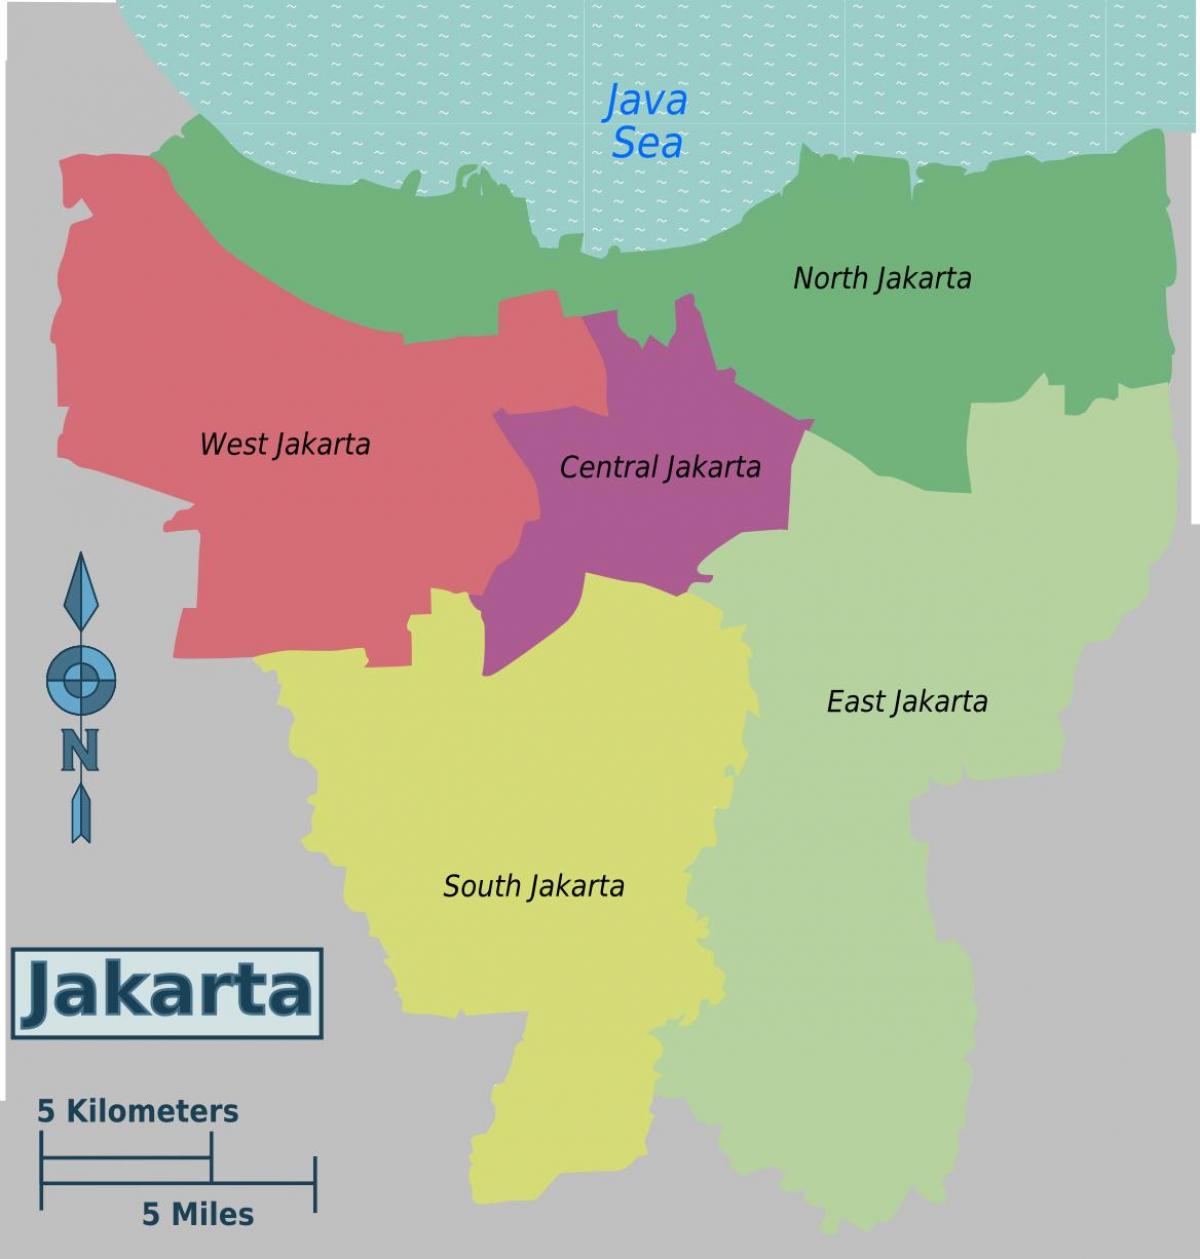 bản đồ của Jakarta huyện